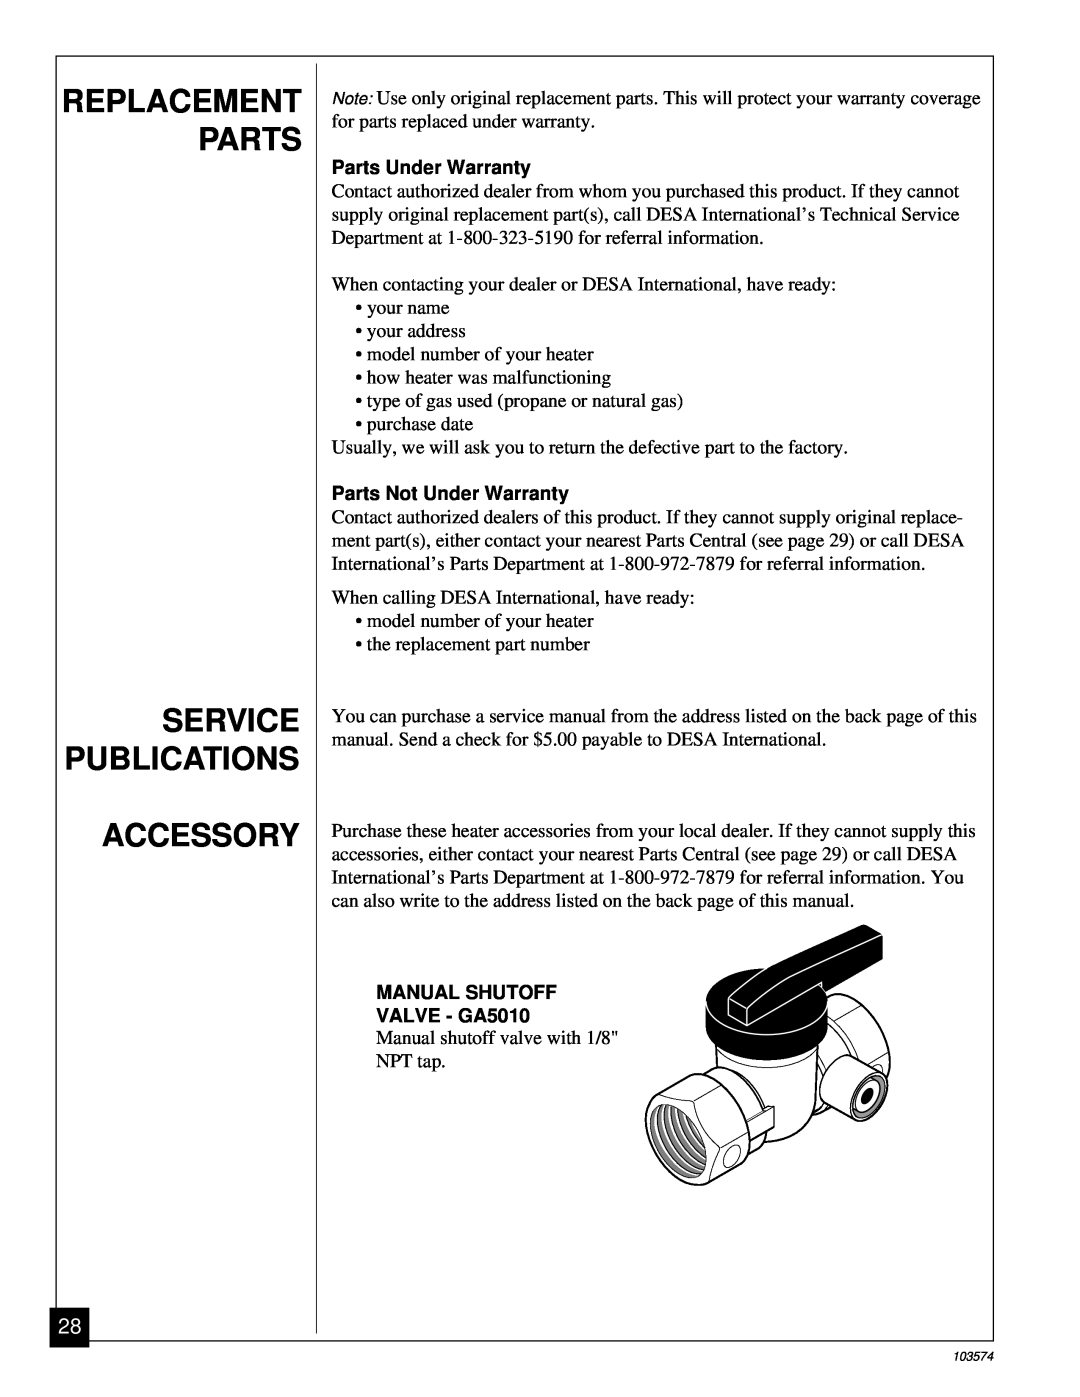 Desa Tech CGN10TL installation manual Service Publications Accessory, Replacement Parts 